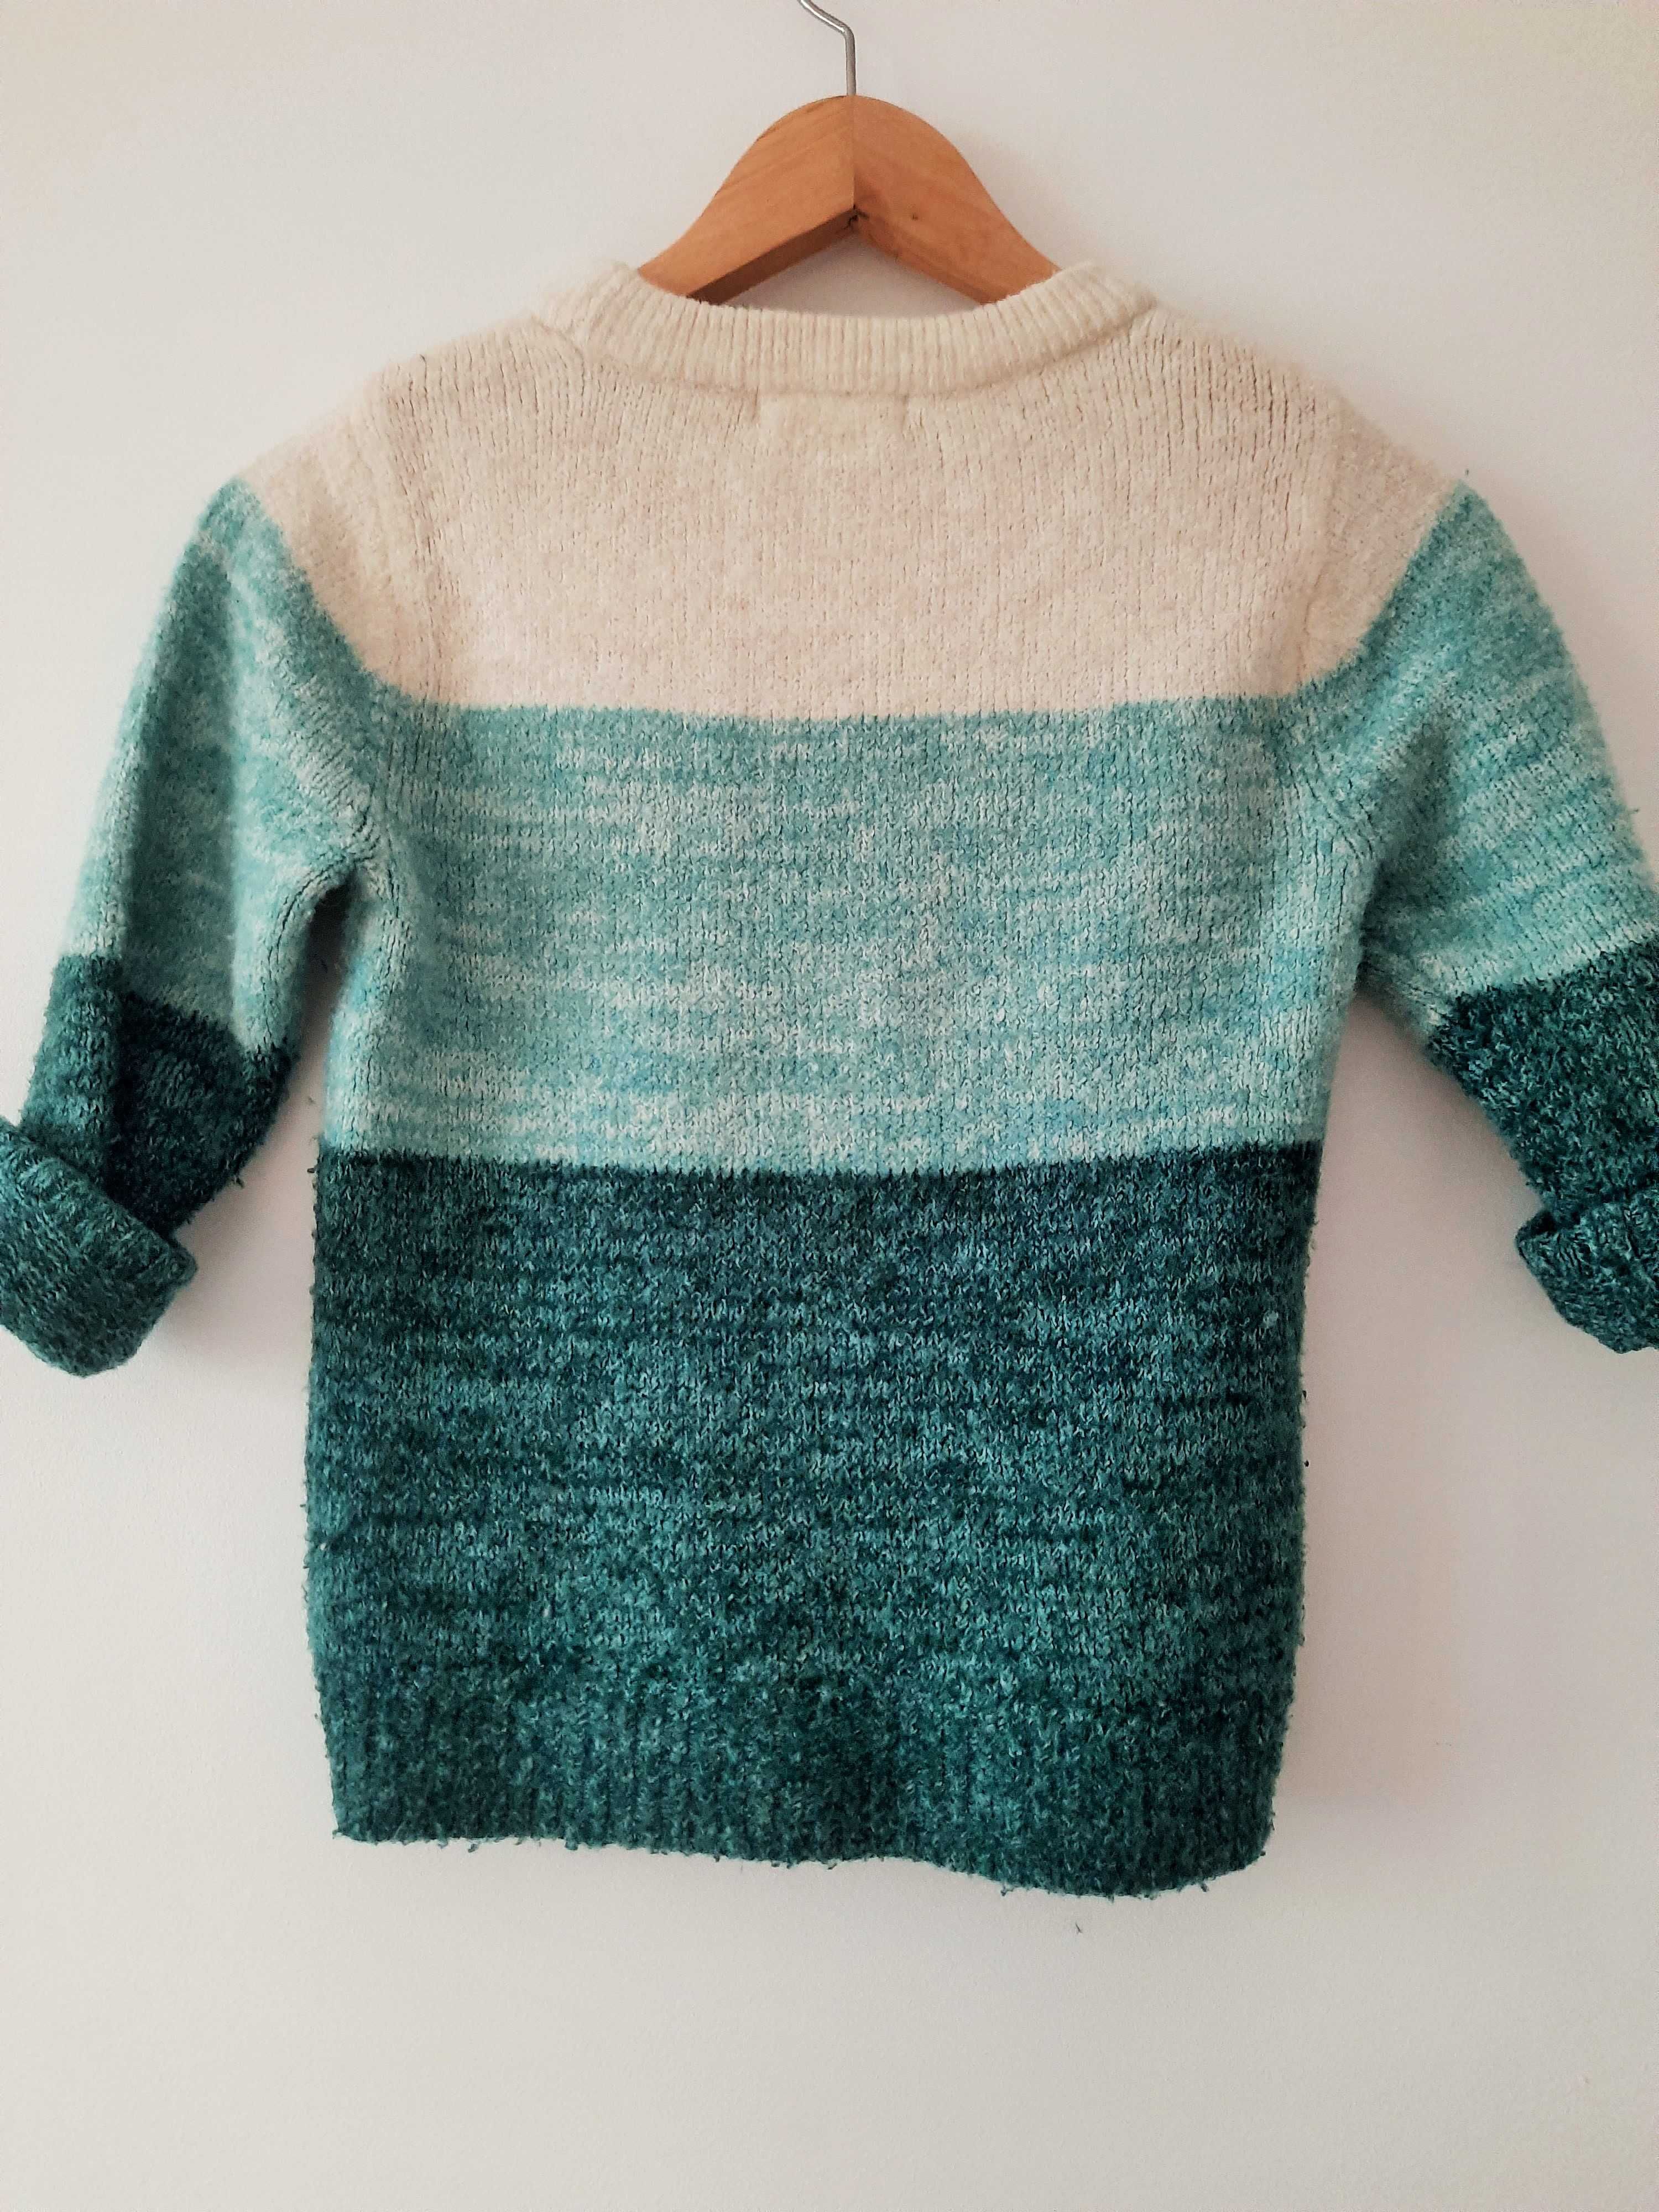 Sweter H&M, jumper, ombre, rozm.110/116, wiosenny, turkus